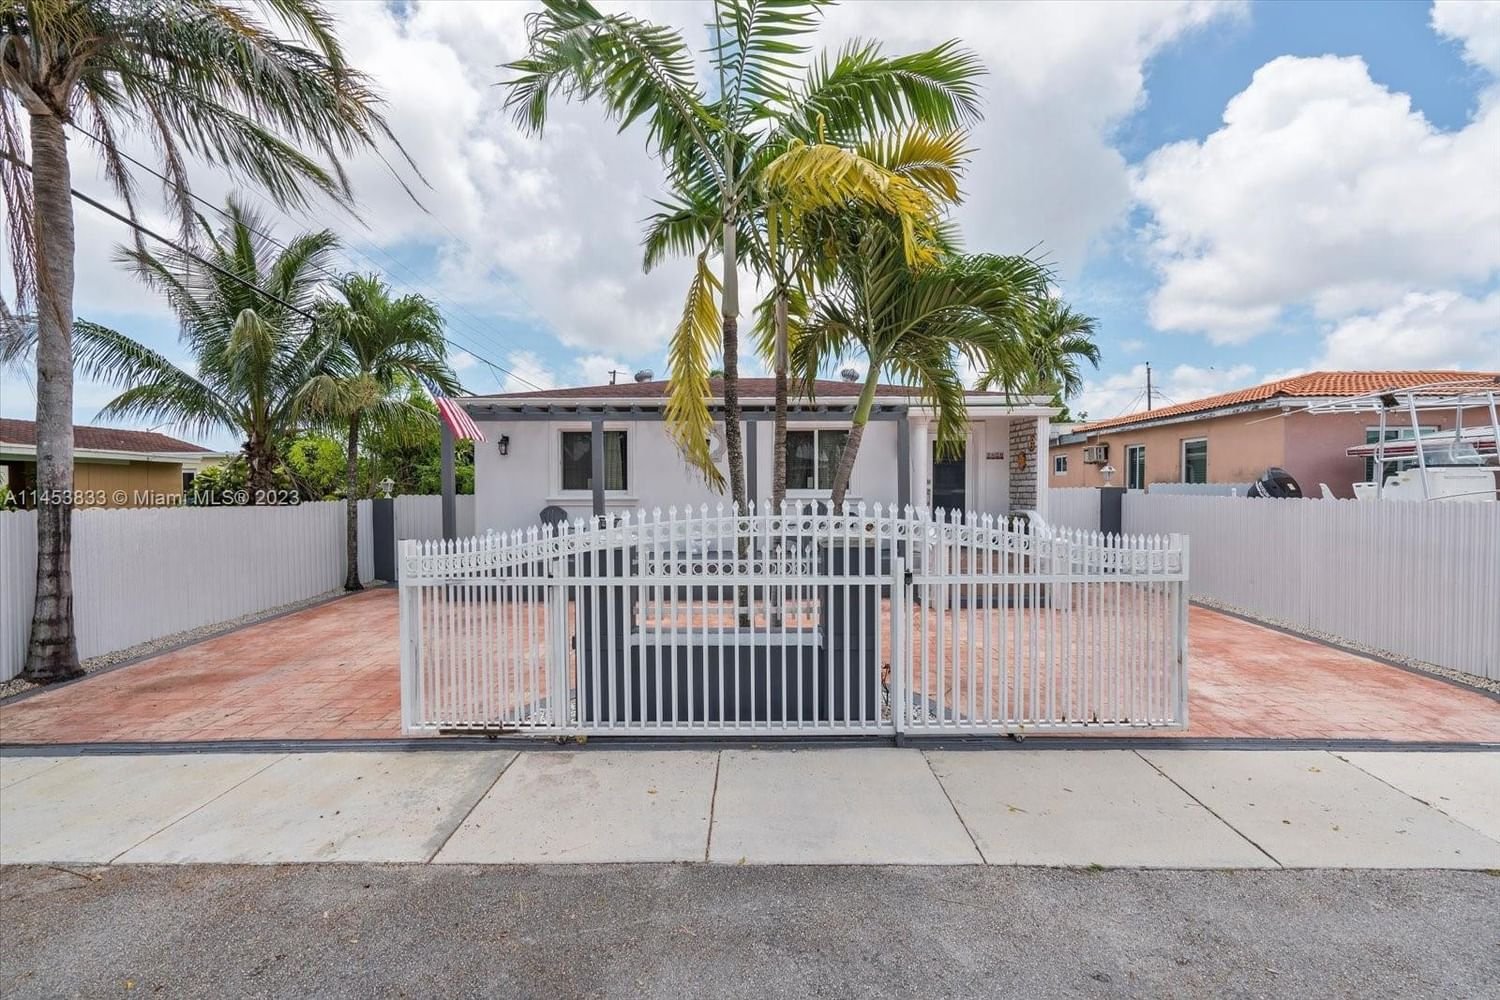 Real estate property located at 3620 19th St, Miami-Dade County, Miami, FL